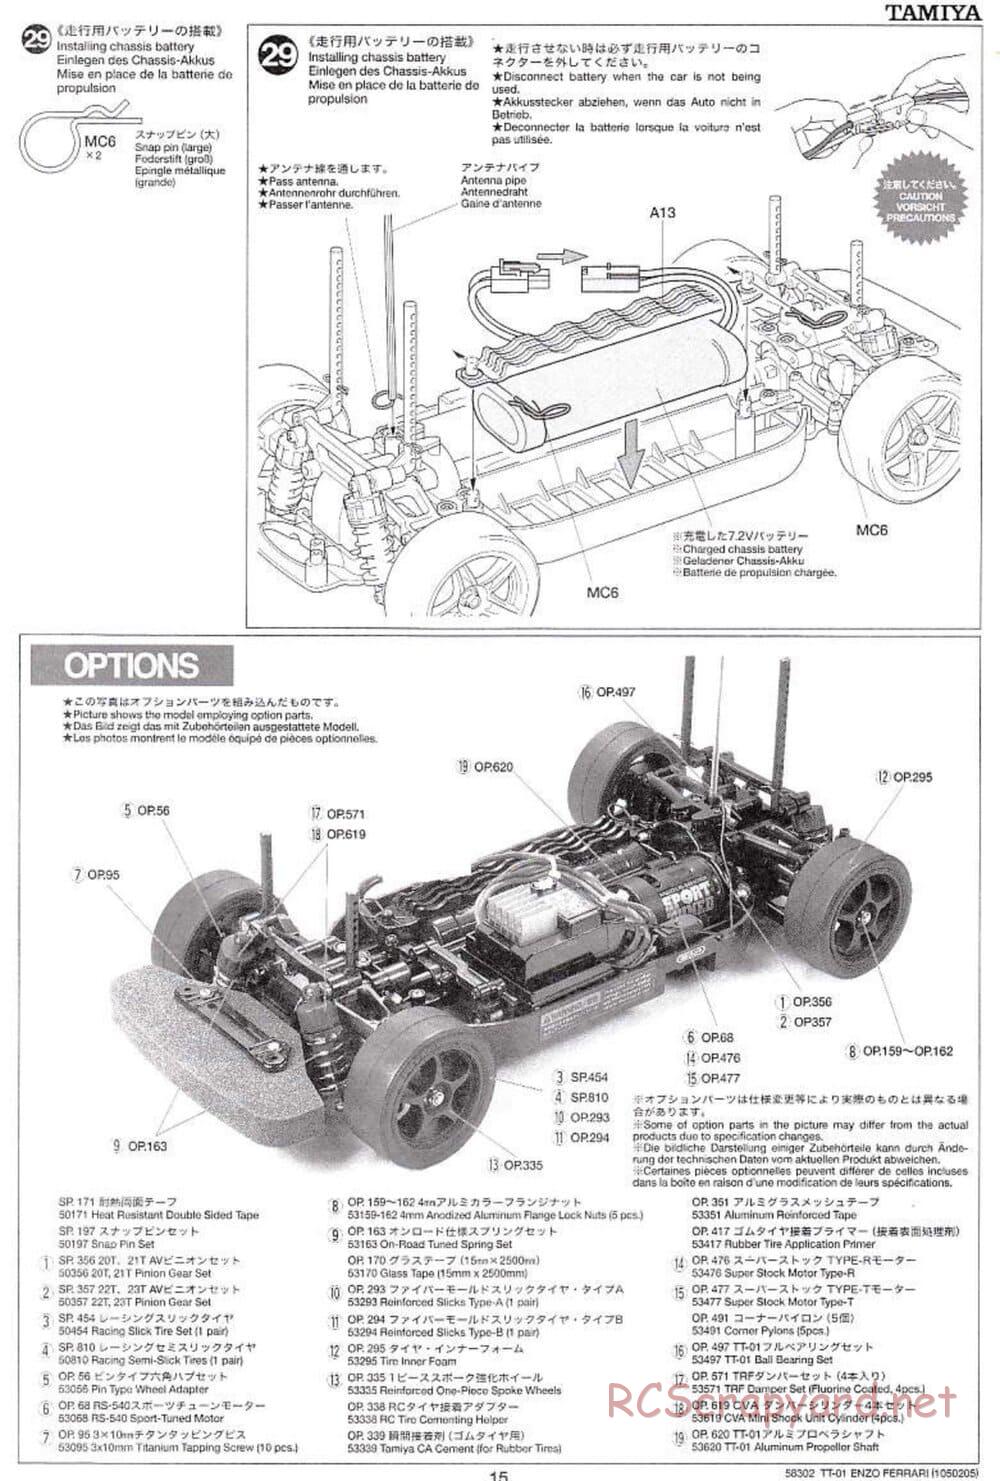 Tamiya - Enzo Ferrari - TT-01 Chassis - Manual - Page 15